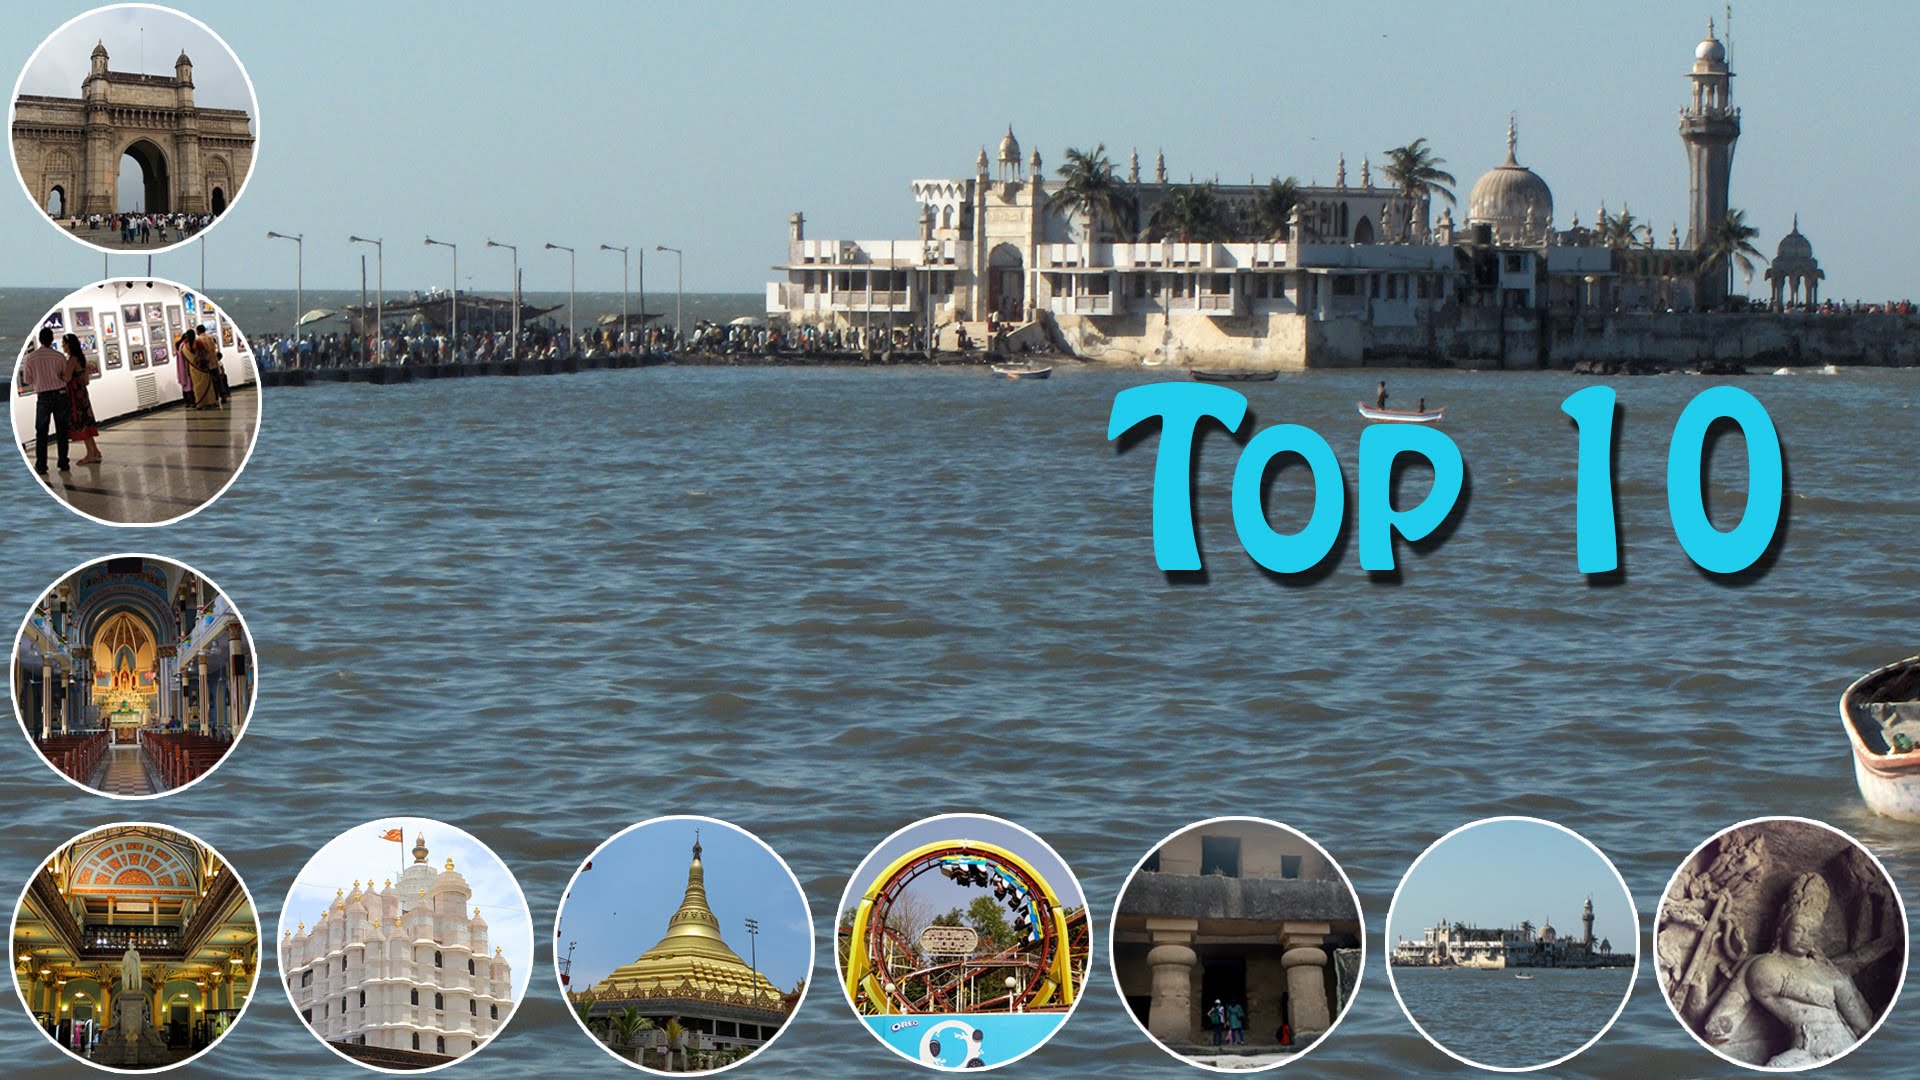 Top 10 Tourist Places in mumbai - The city of dreams, Best of Mumbai ...